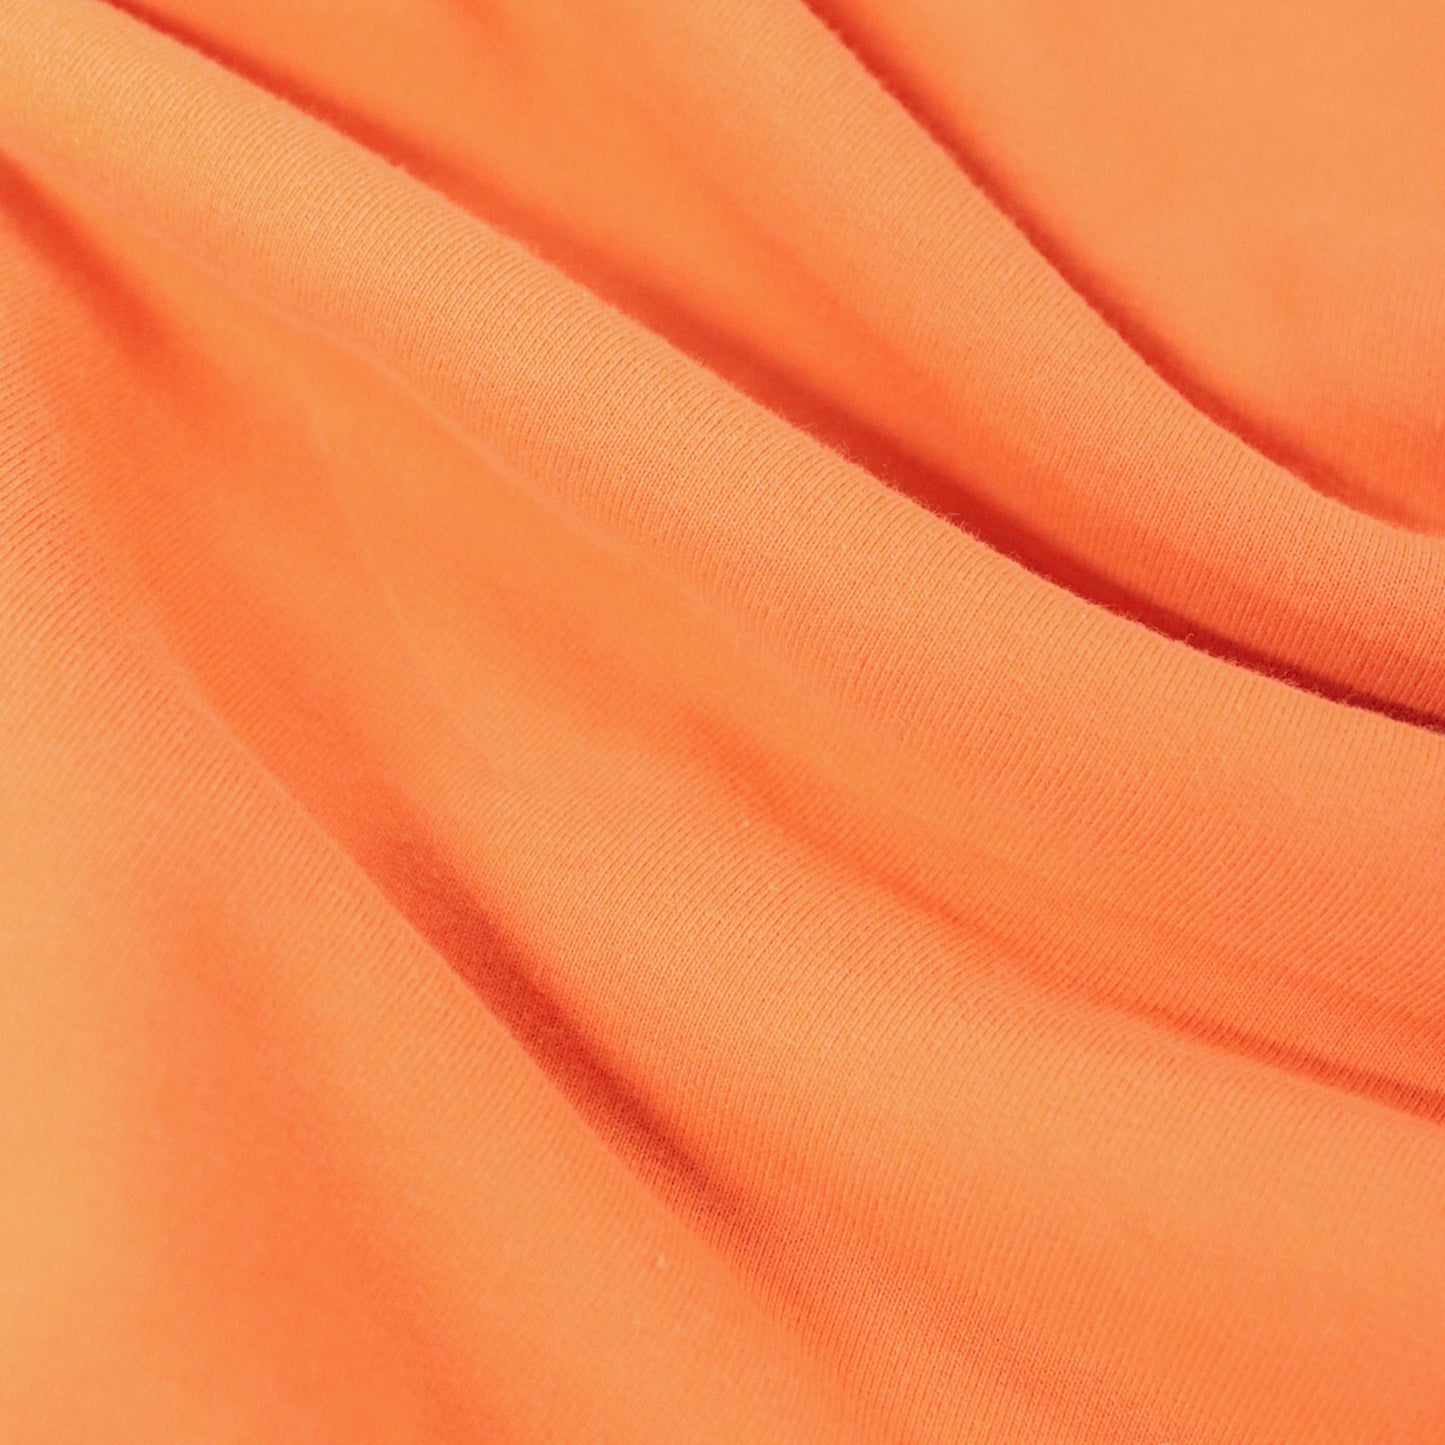 Signature Cropped Side Pocket Hoody – Orange Pigment